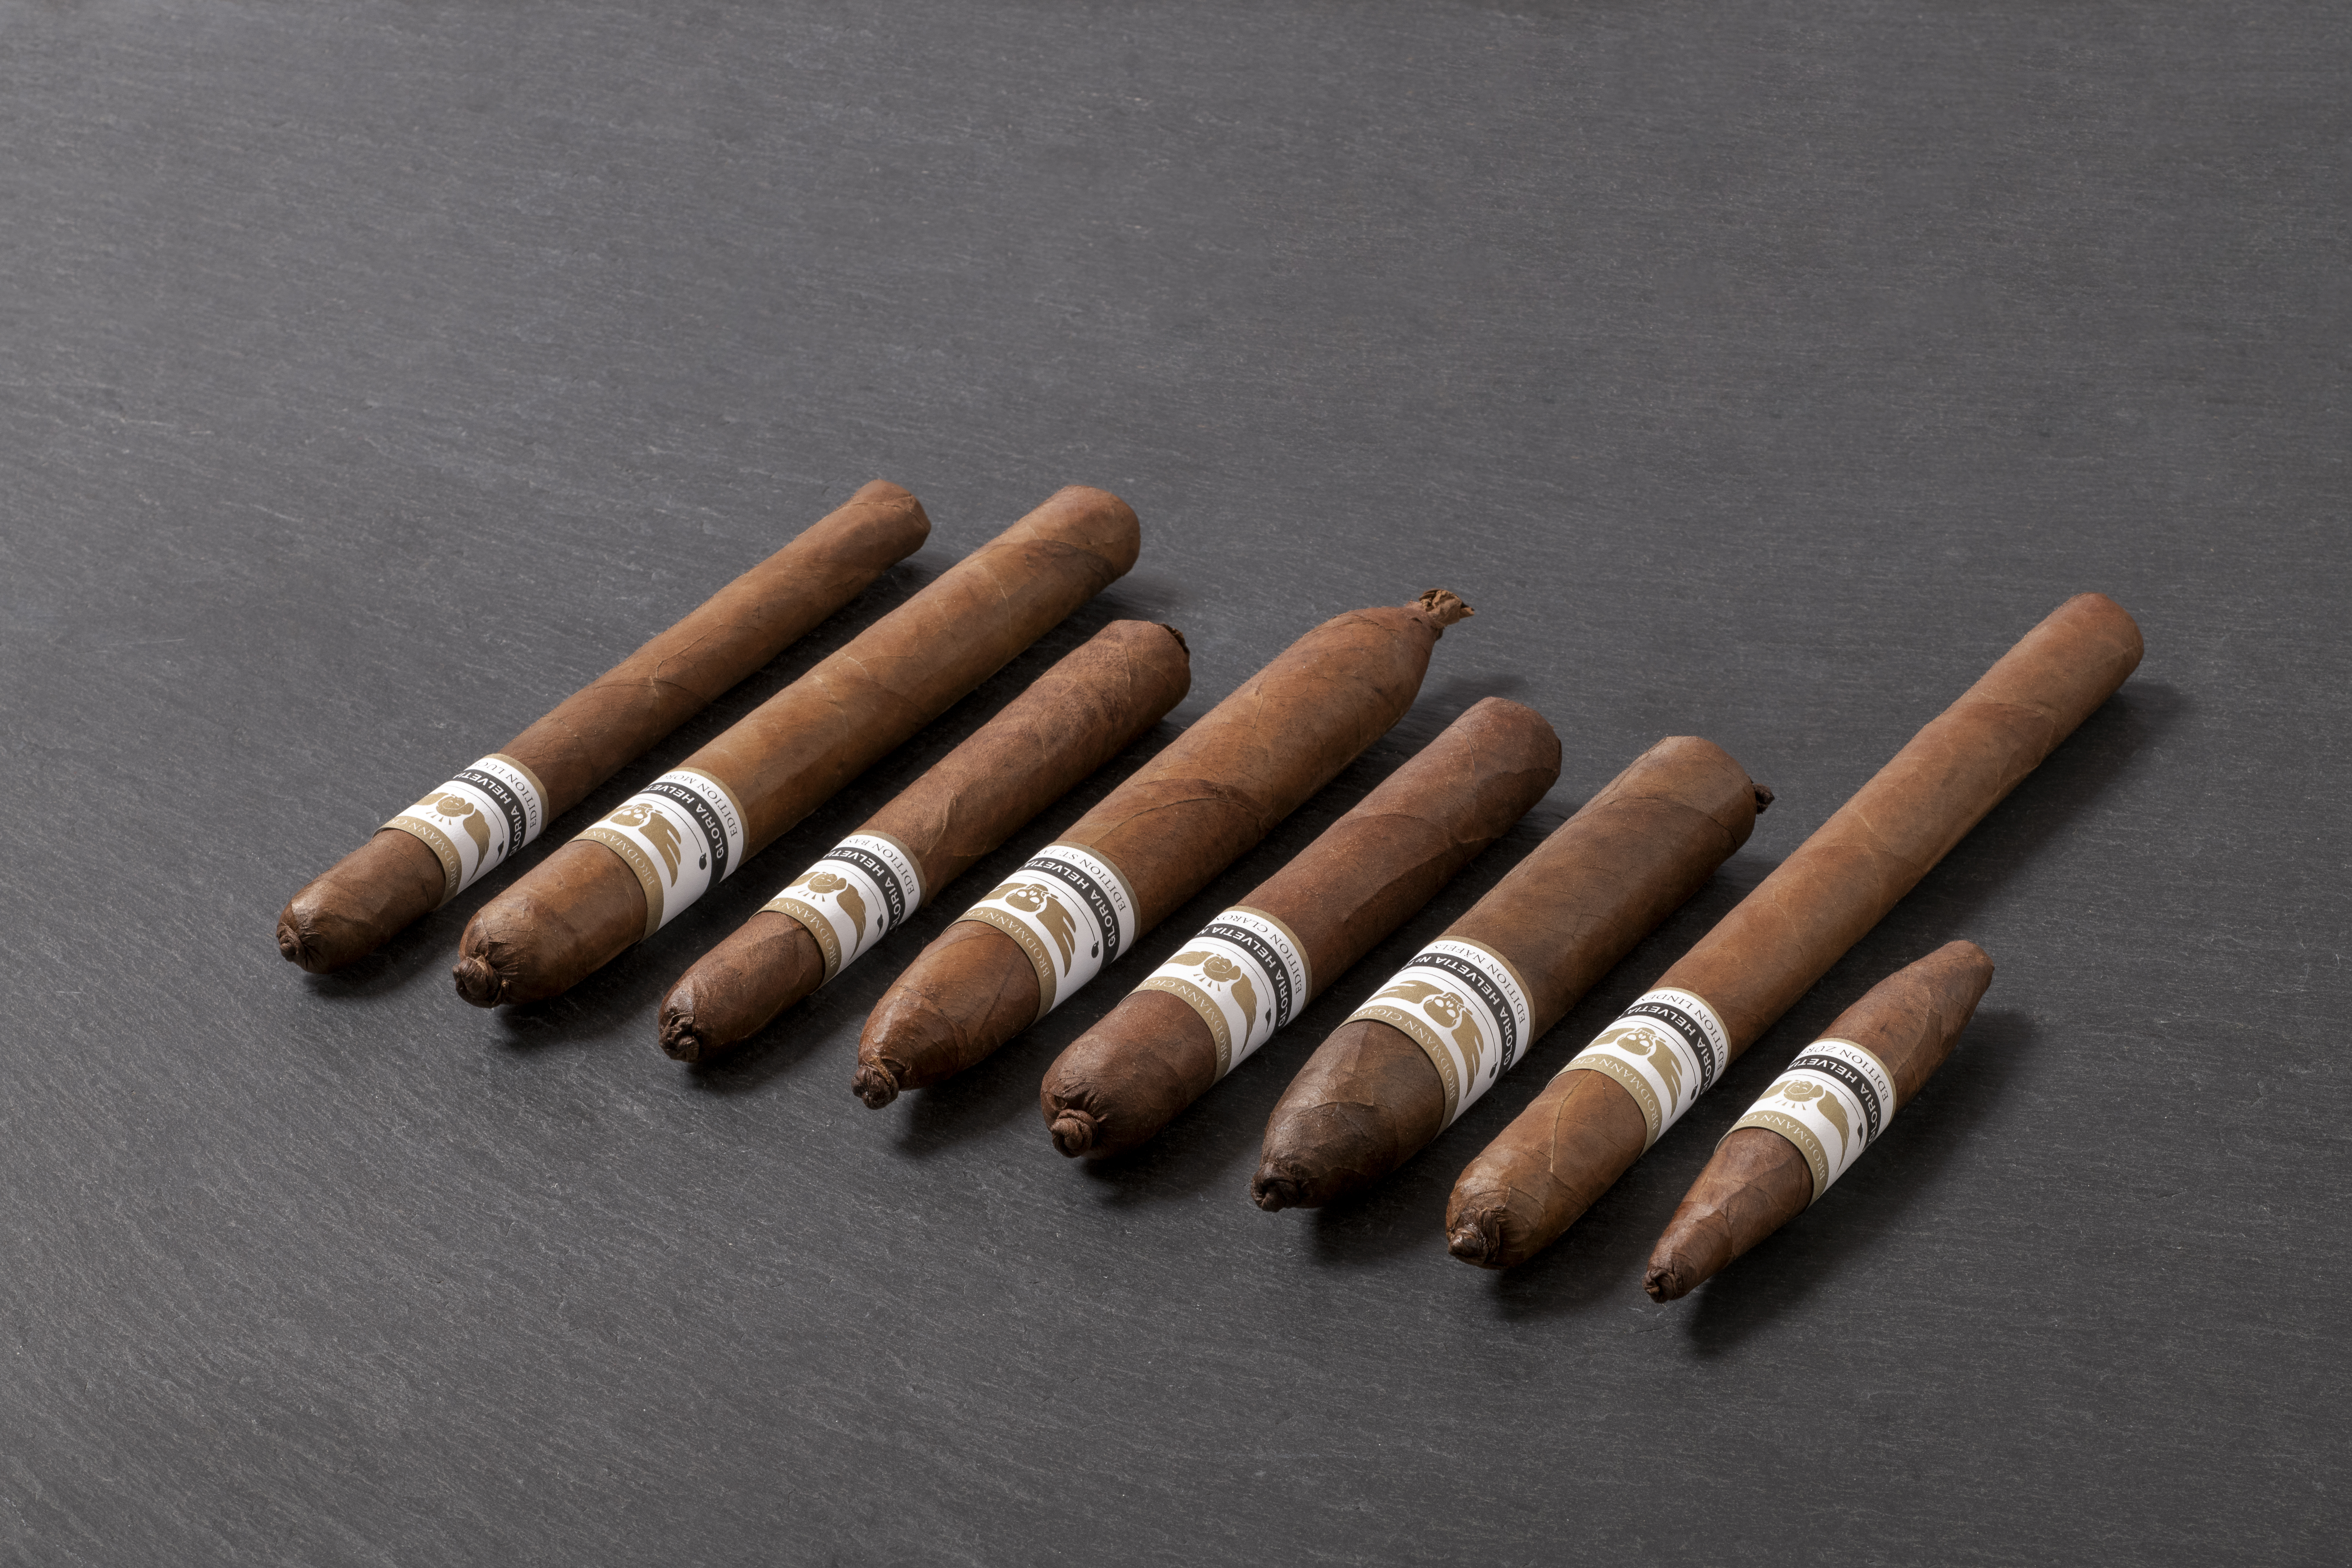 Brodmann Cigars